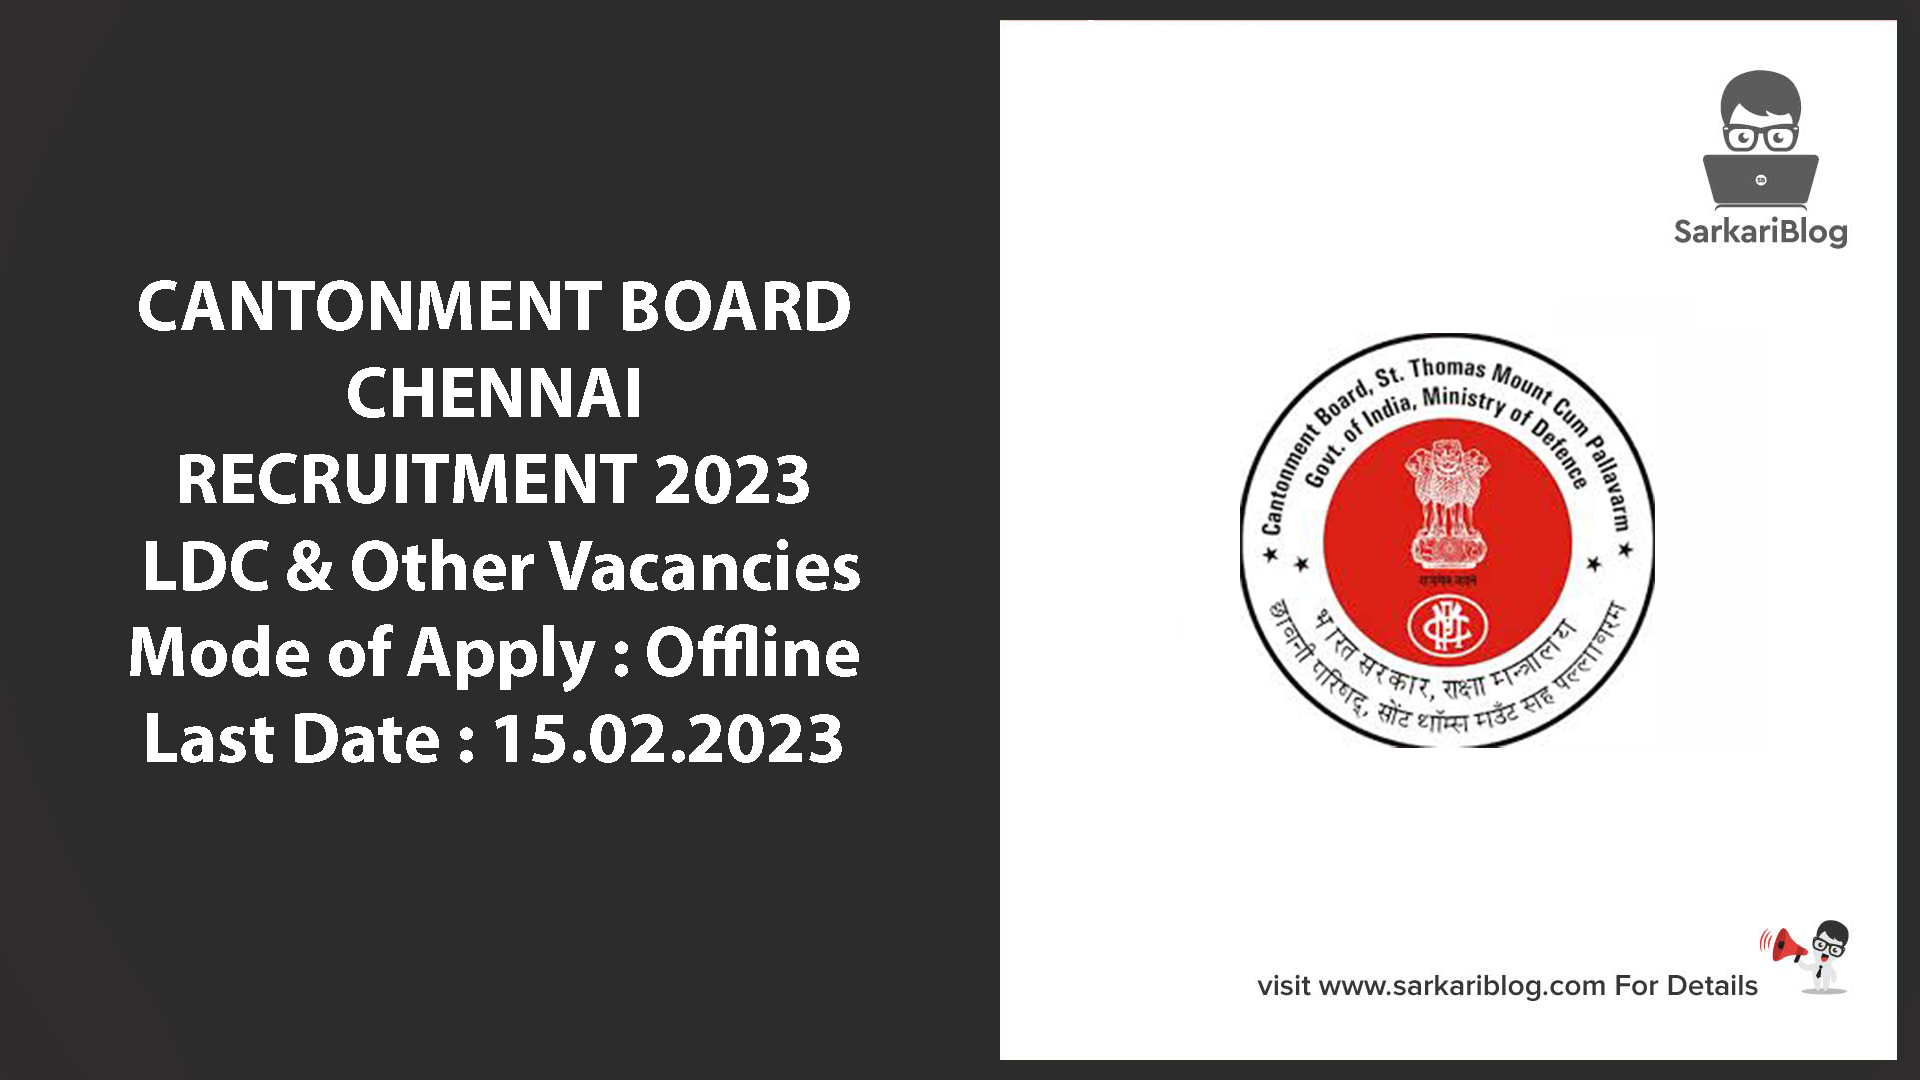 Cantonment Board Chennai Recruitment 2023